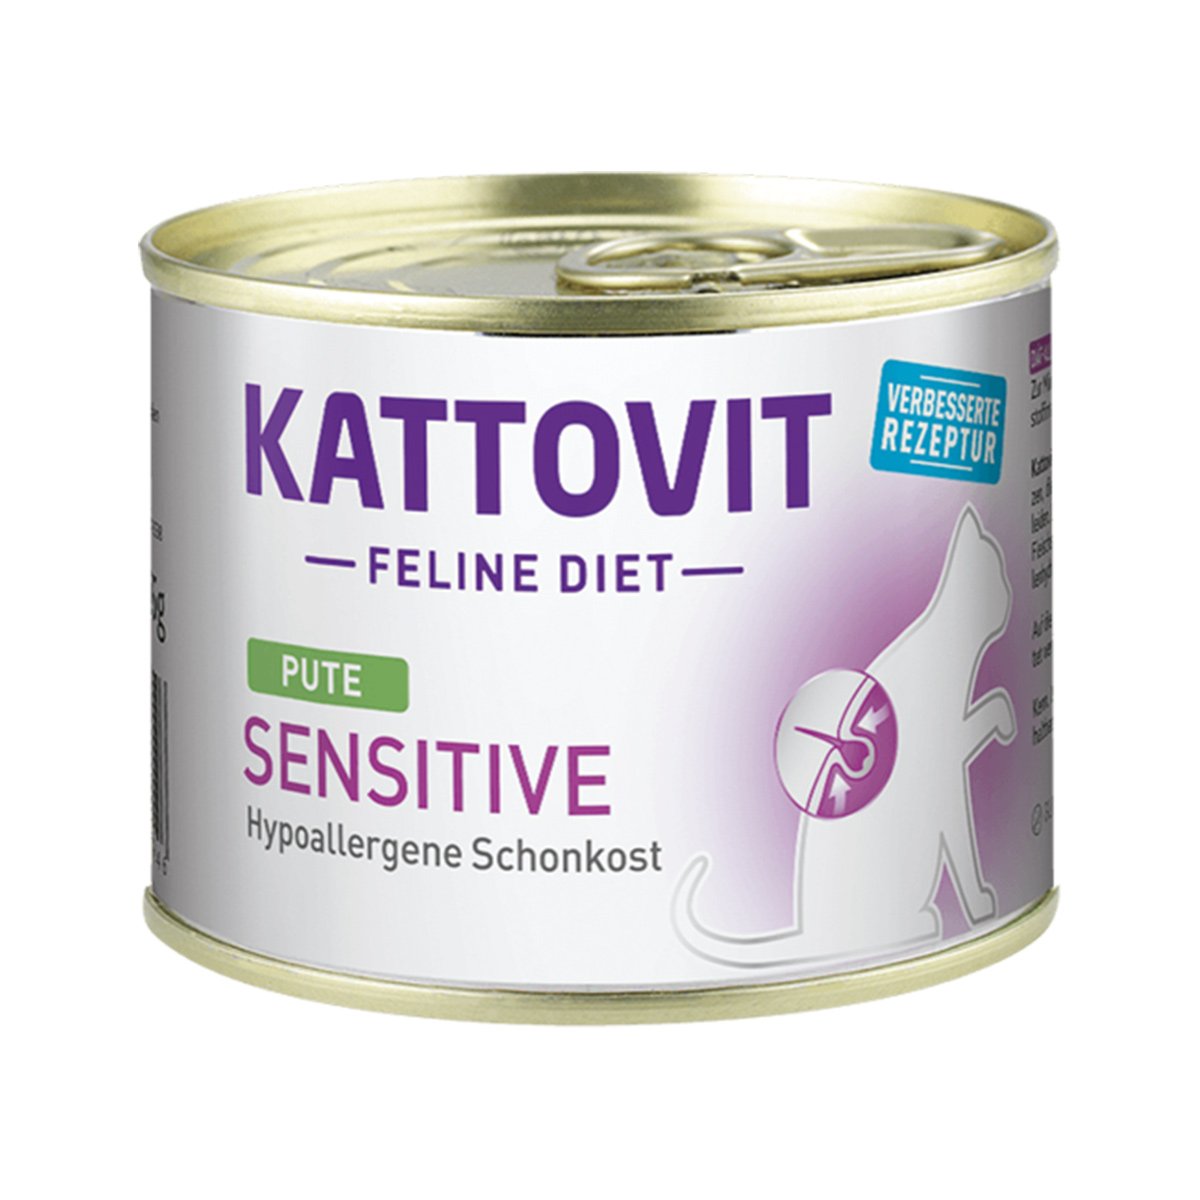 KATTOVIT Feline Diet Sensitive Pute 12x85g von Kattovit